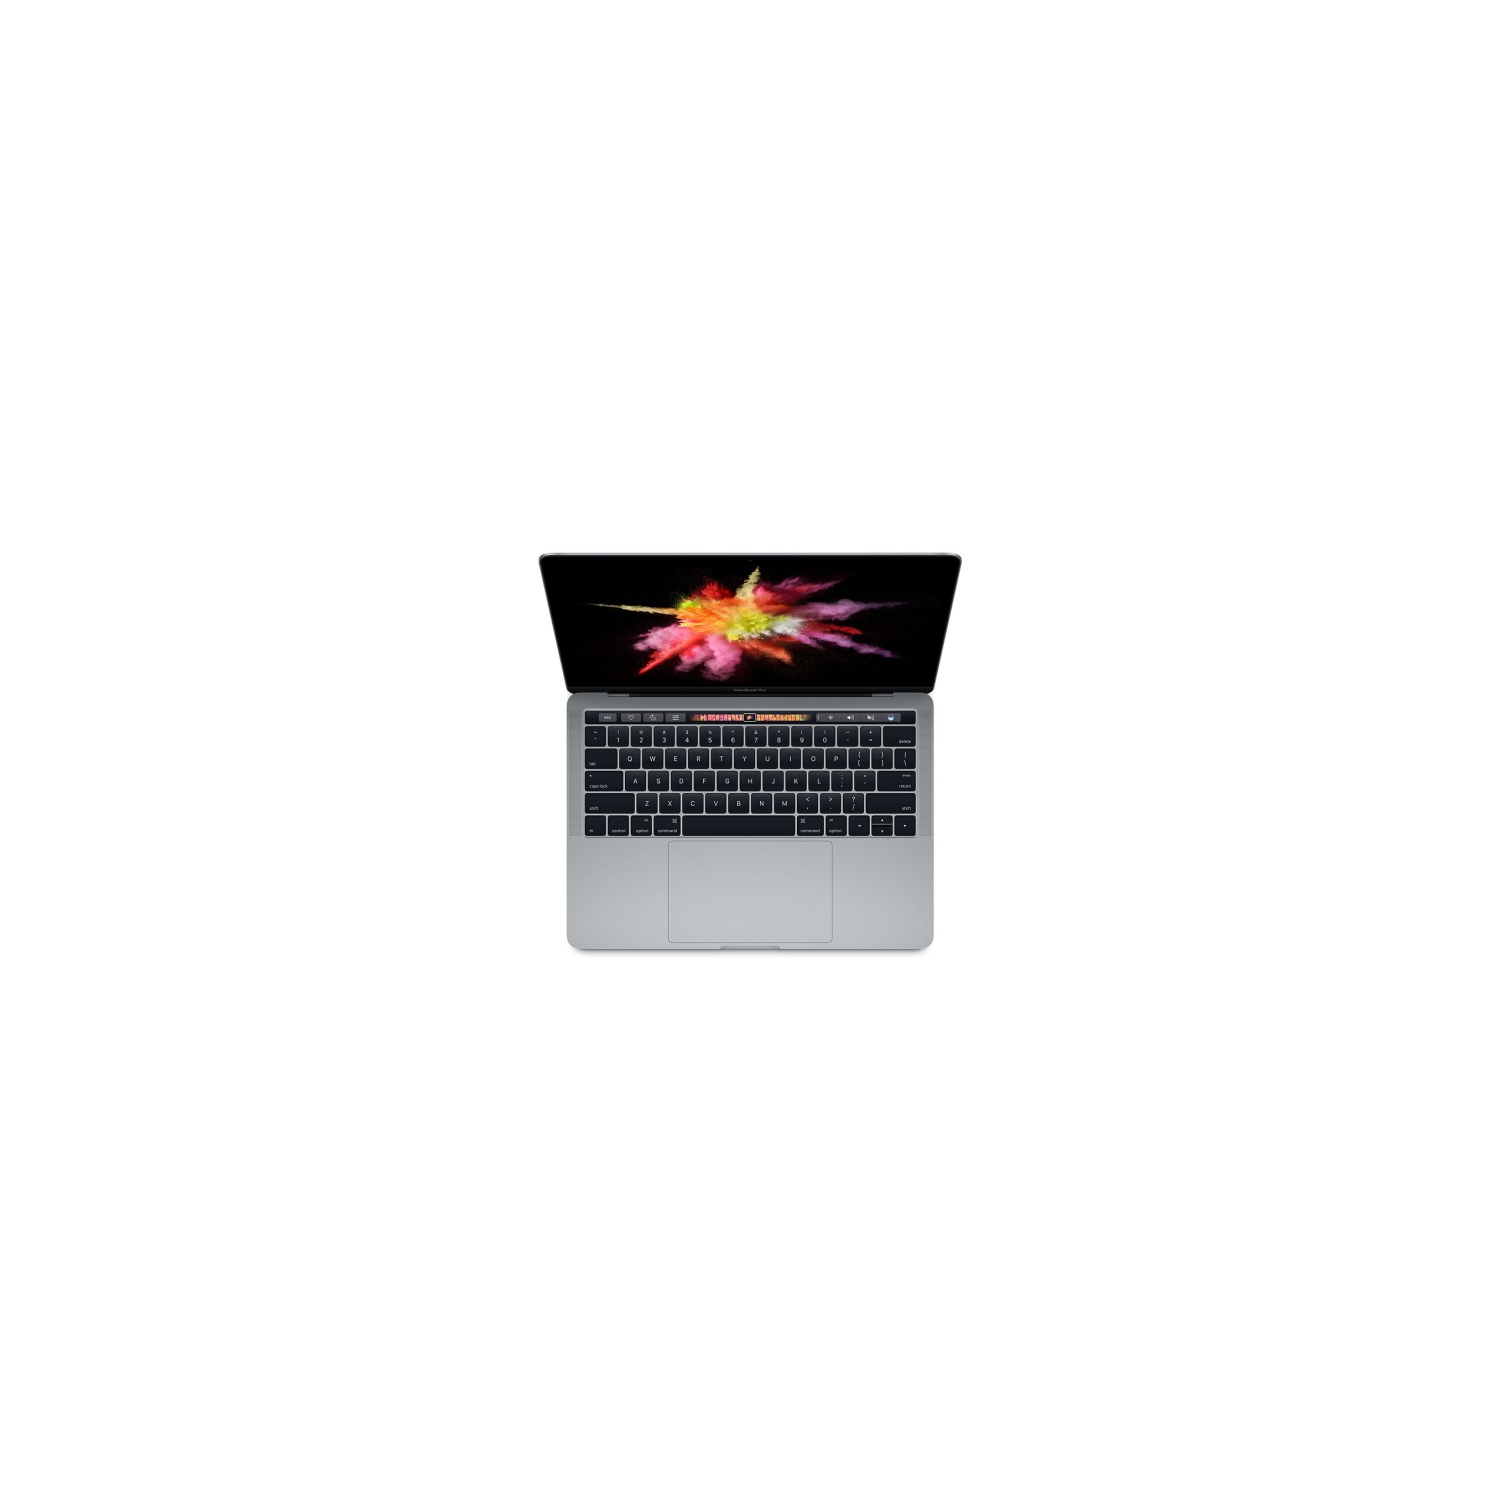 Apple MacBook Pro 13" A1989 i7-8559U 2.7GHz 16GB RAM 256GB SSD Touch-Bar (Mid-2018) | Refurbished (Excellent)